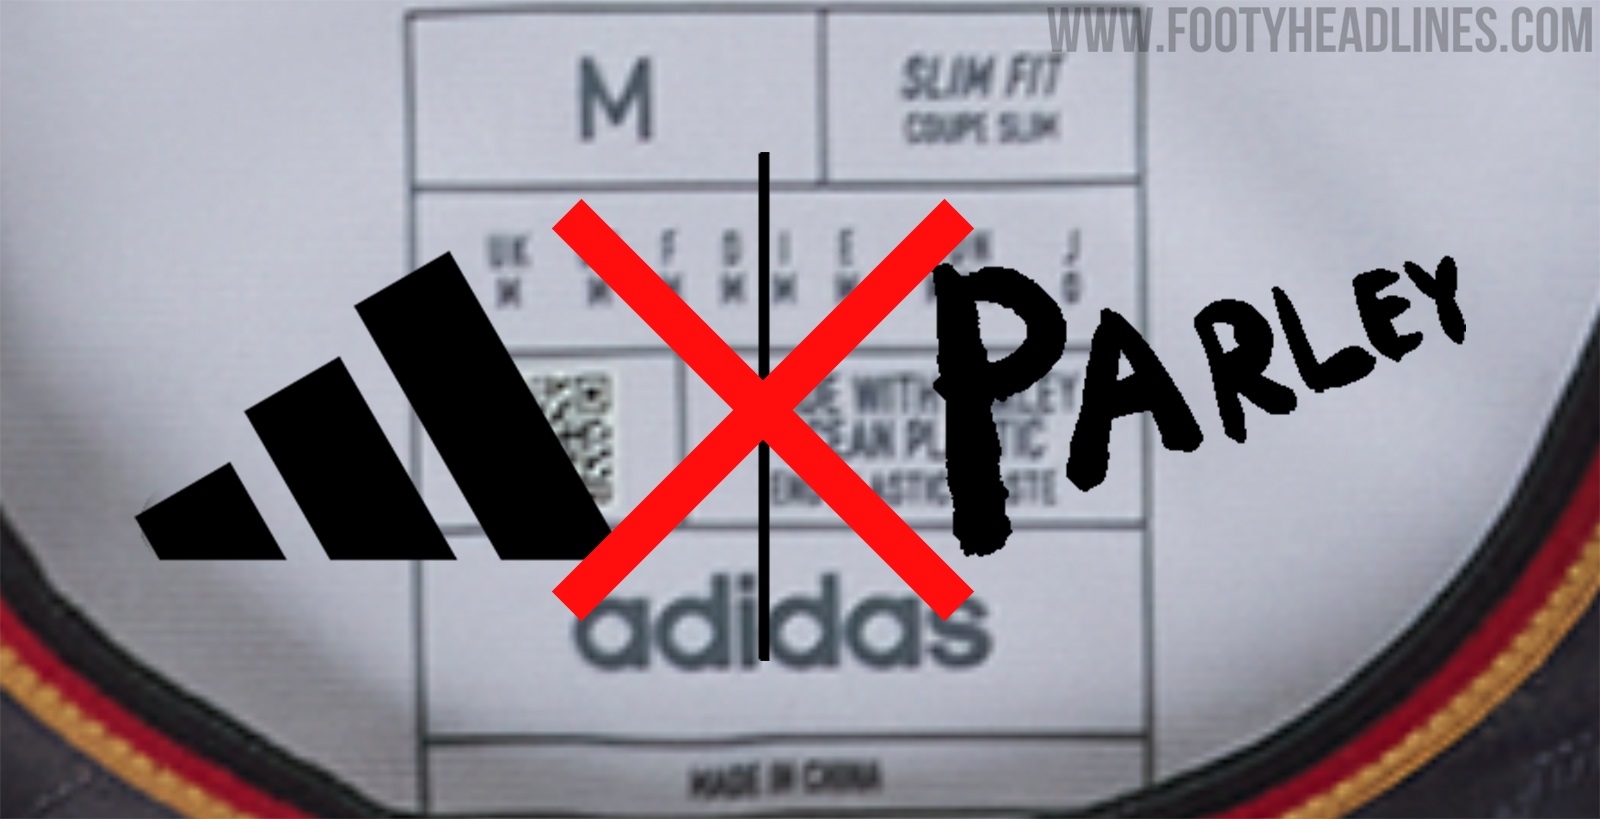 Raadplegen Bekentenis Verloren Report: Adidas Authentic 2022 World Cup Kits Feature 0% Parley Ocean  Plastic - Parley to End Cooperation? - Footy Headlines